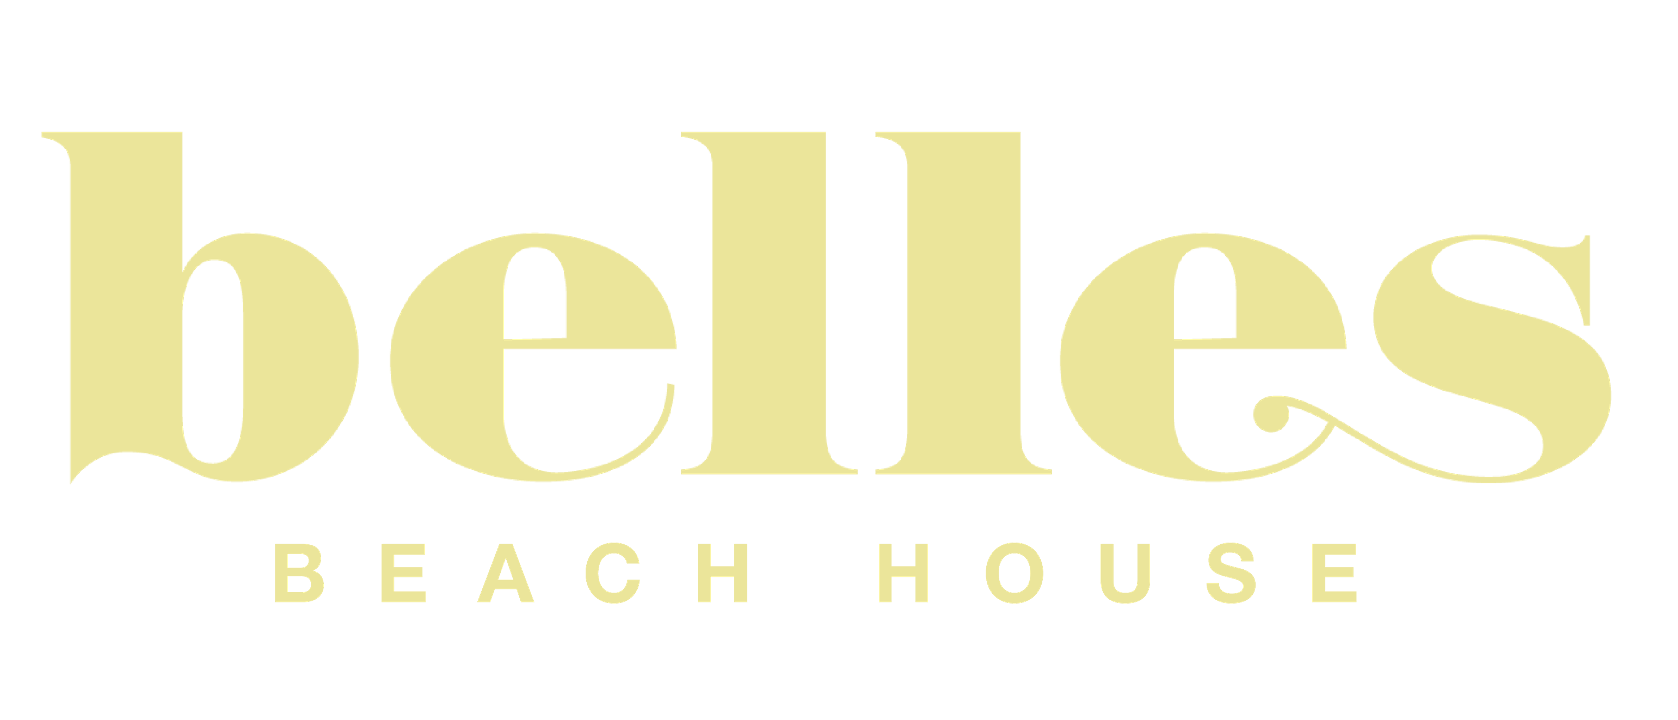 Belles Beach House